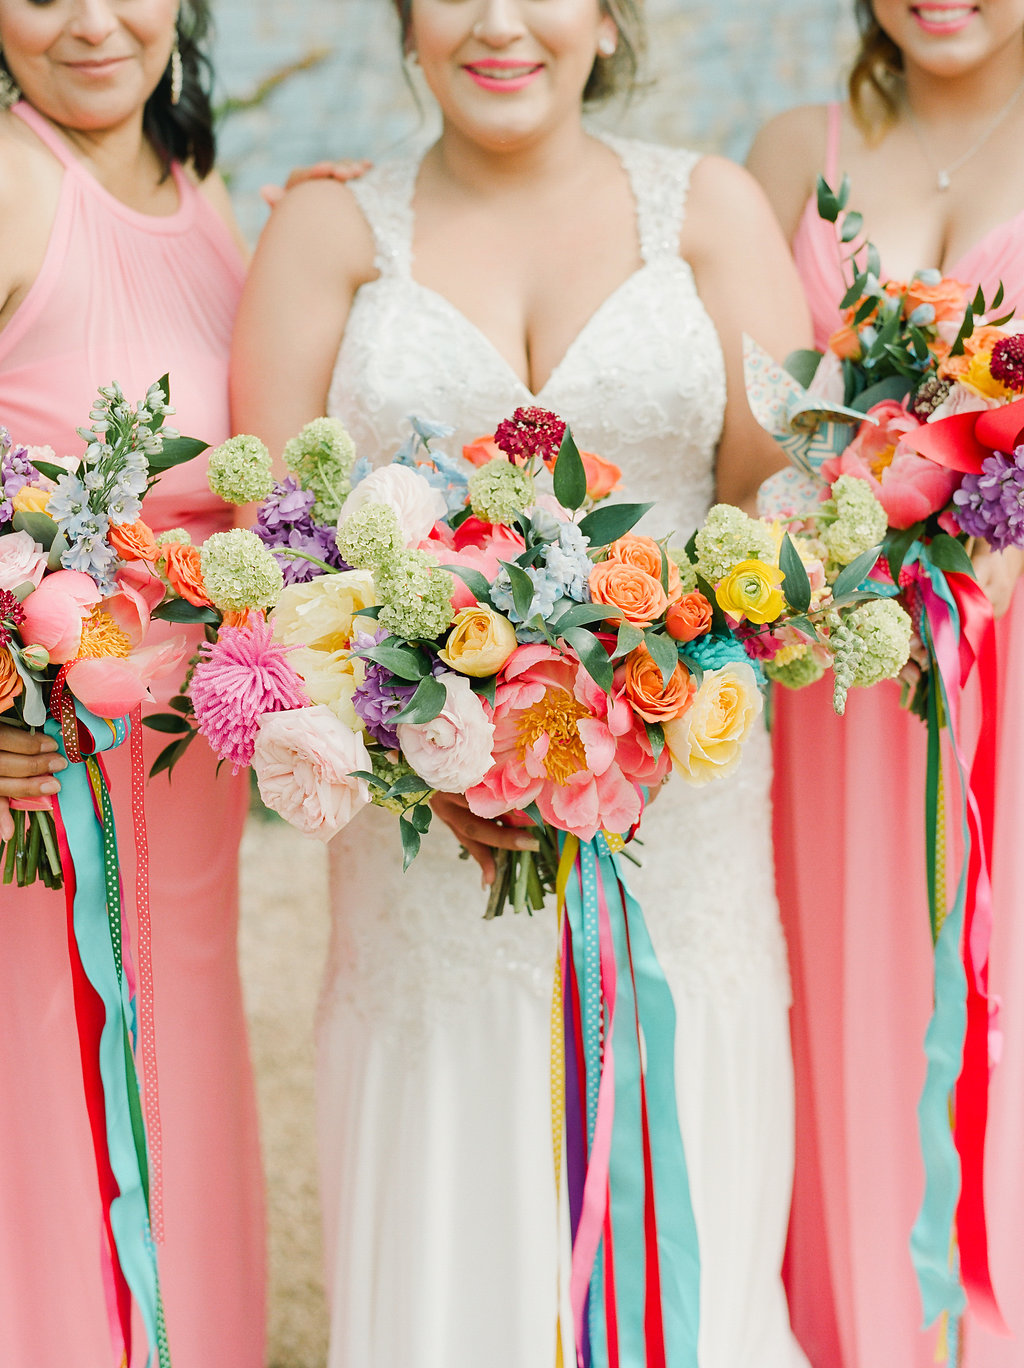 colorful wedding bouquets with bright ribbons - https://ruffledblog.com/modern-playful-texas-carnival-wedding